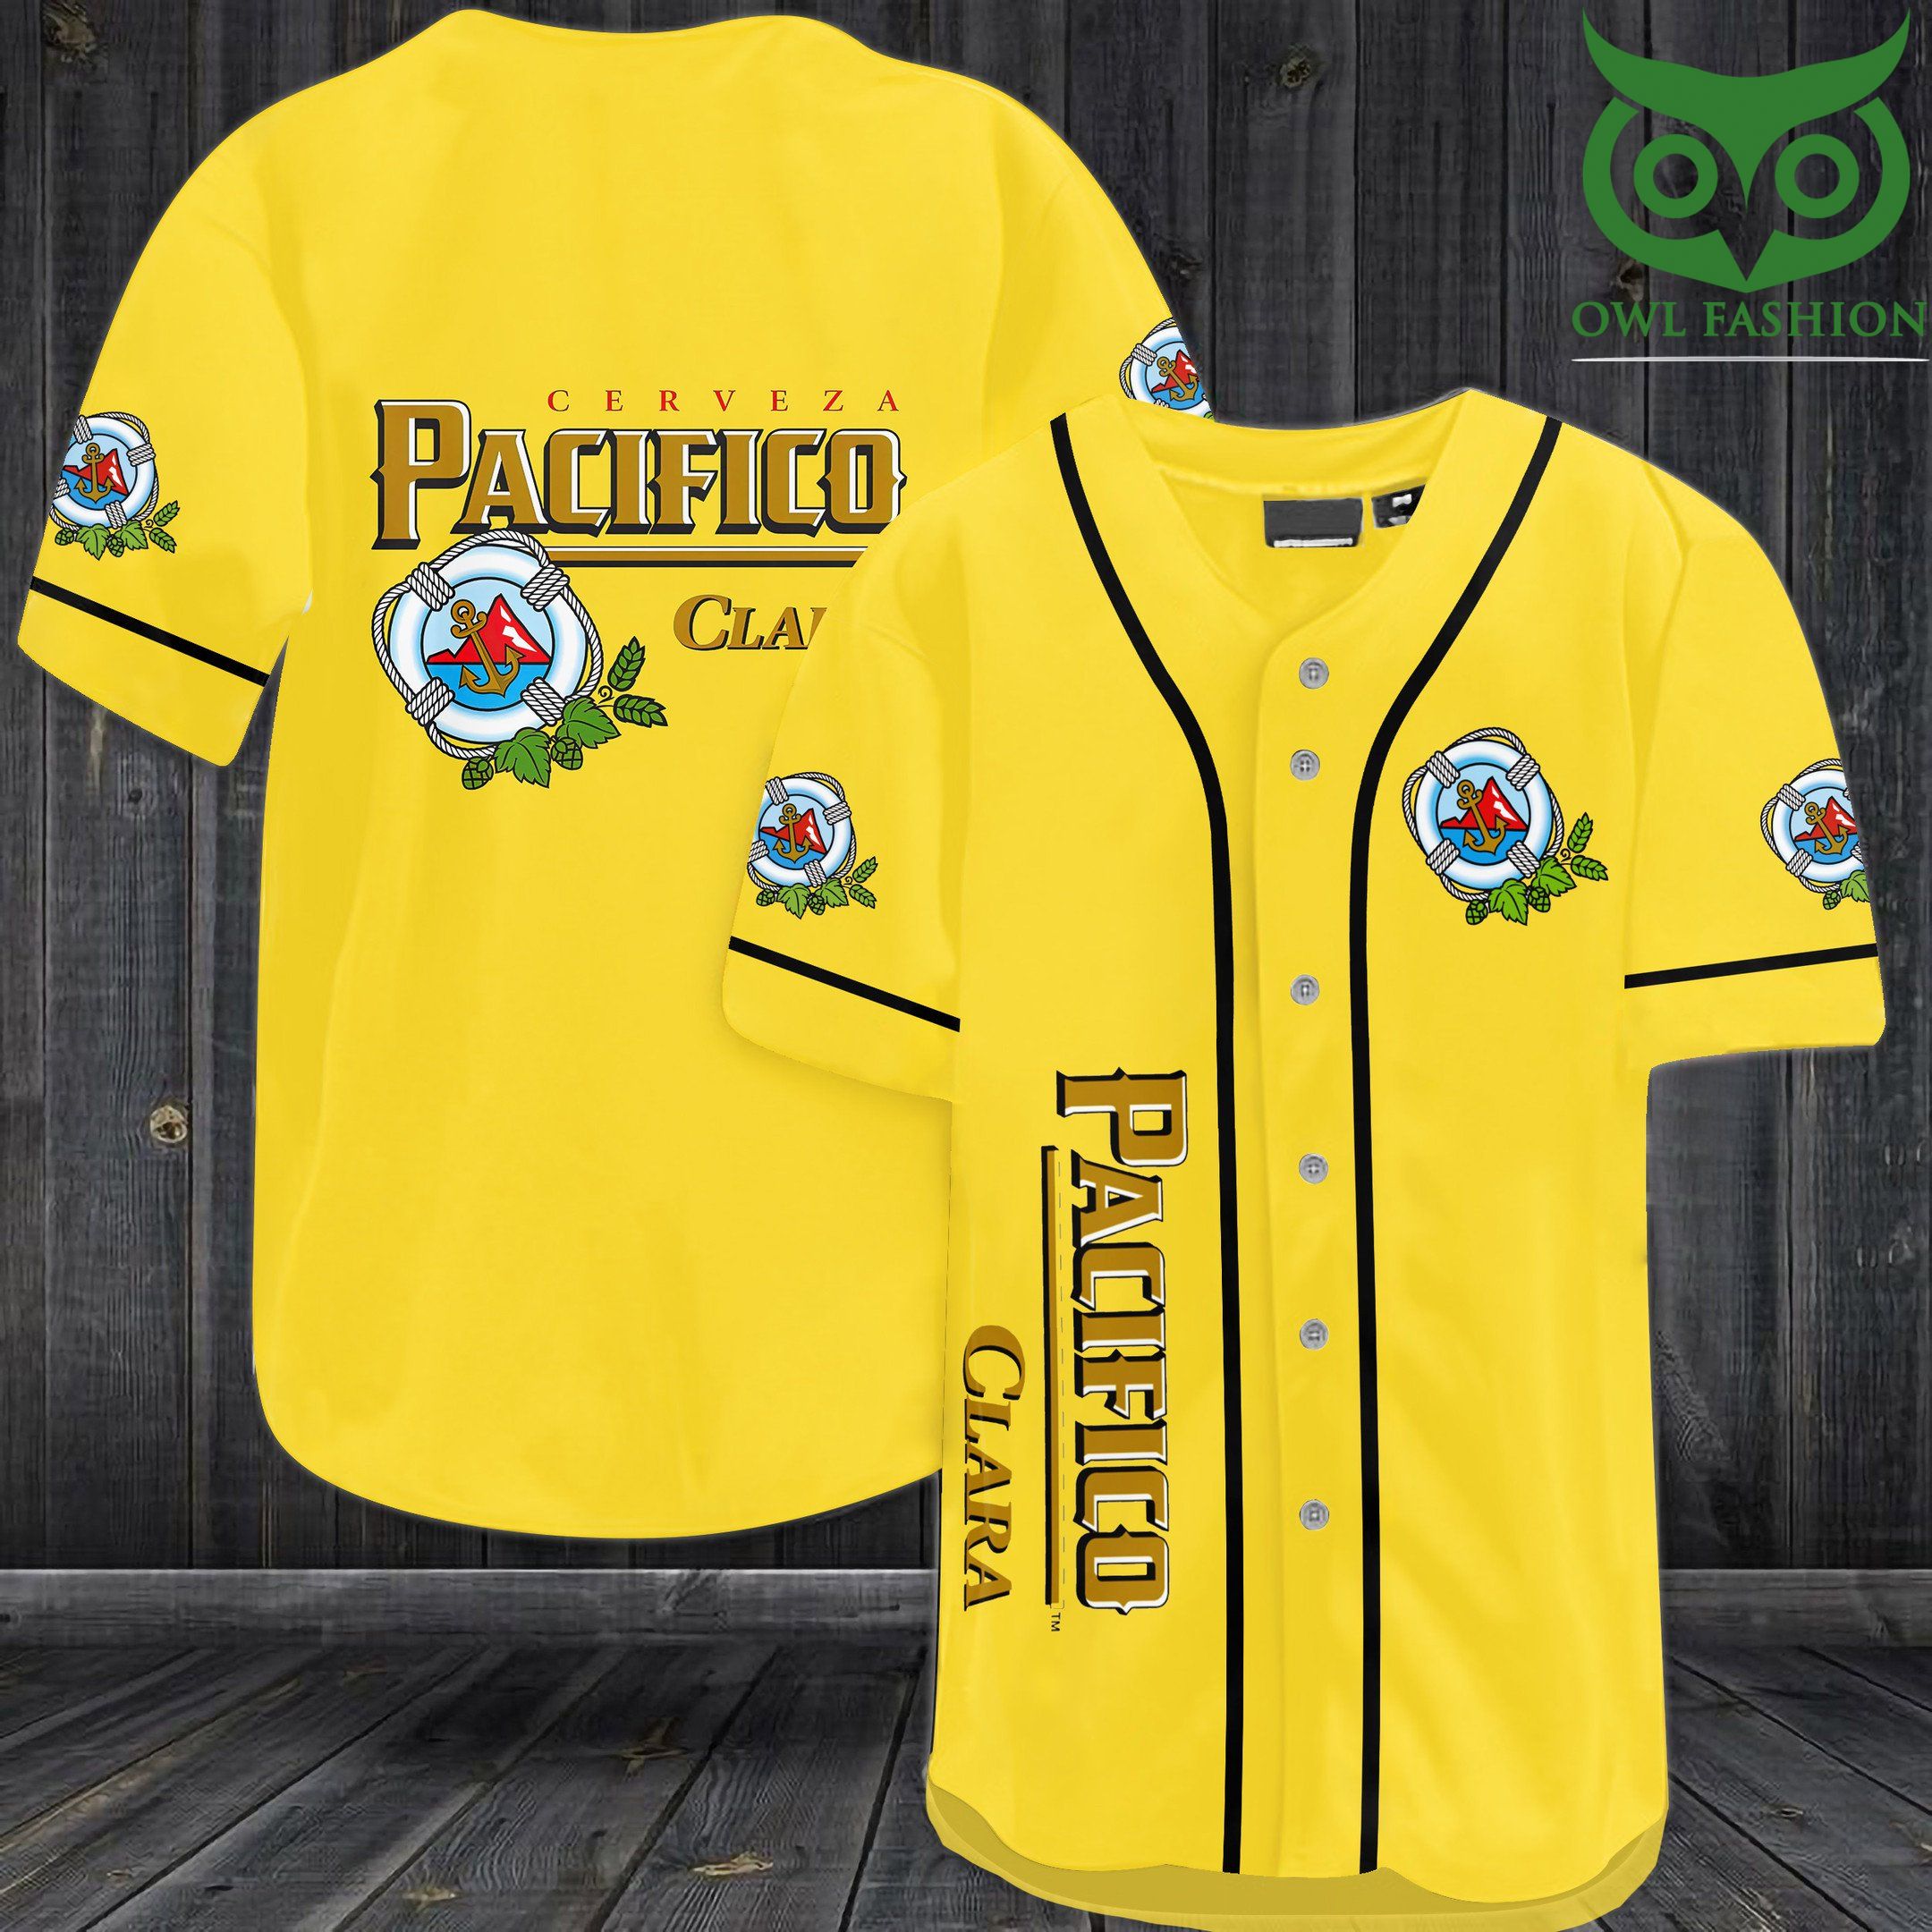 Pacifico Clara Baseball Jersey Shirt